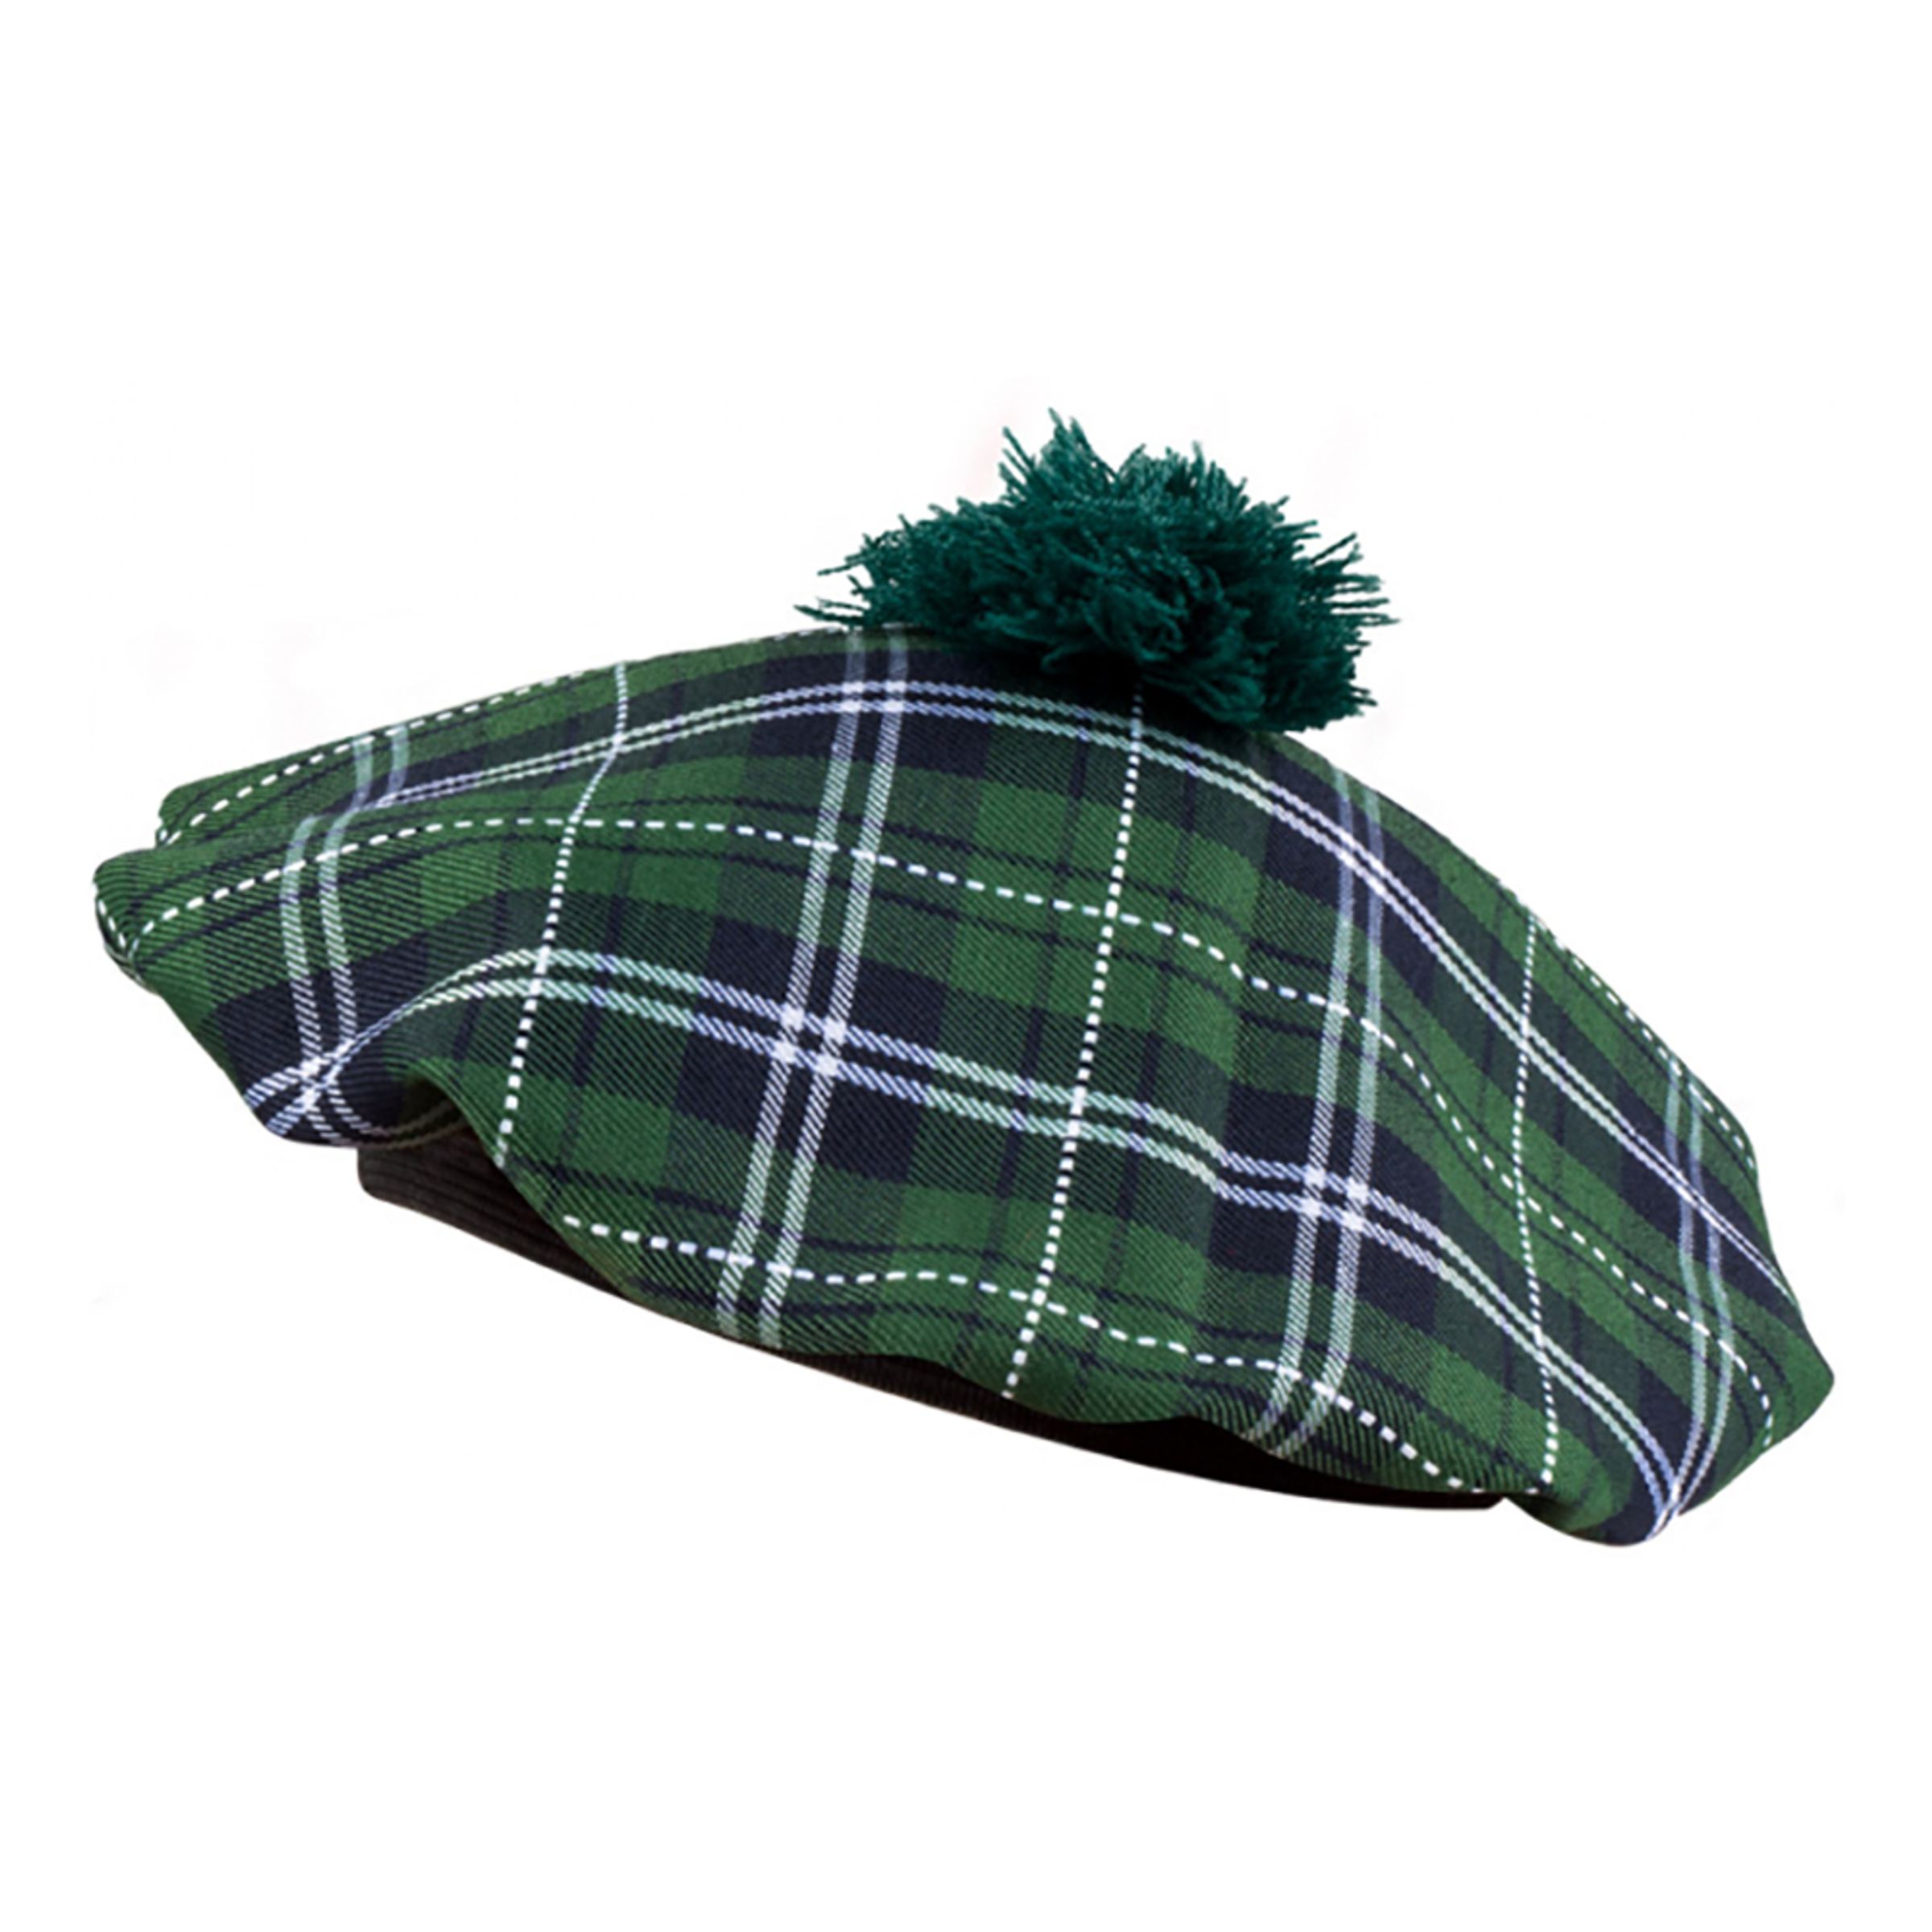 Grön Mrs Tartan Hatt - One size